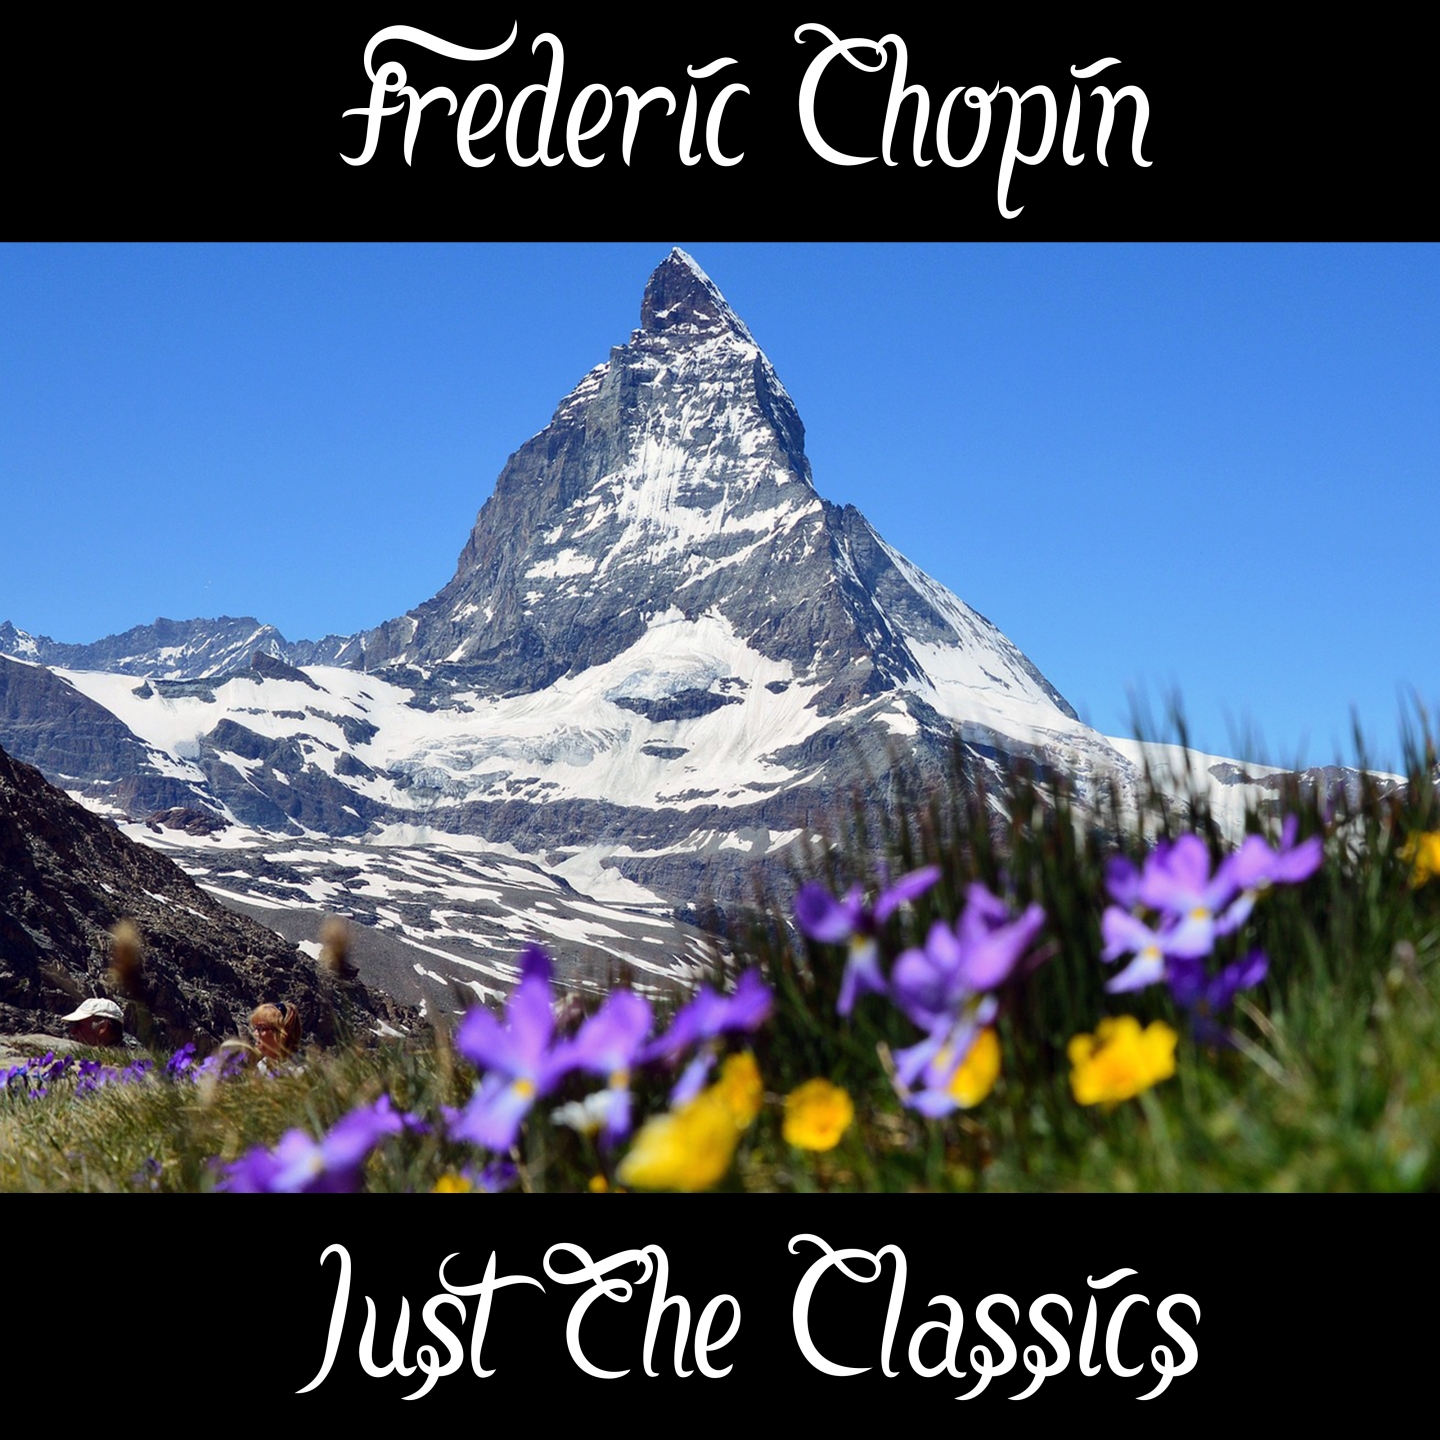 Fre de ric Chopin: Just The Classics